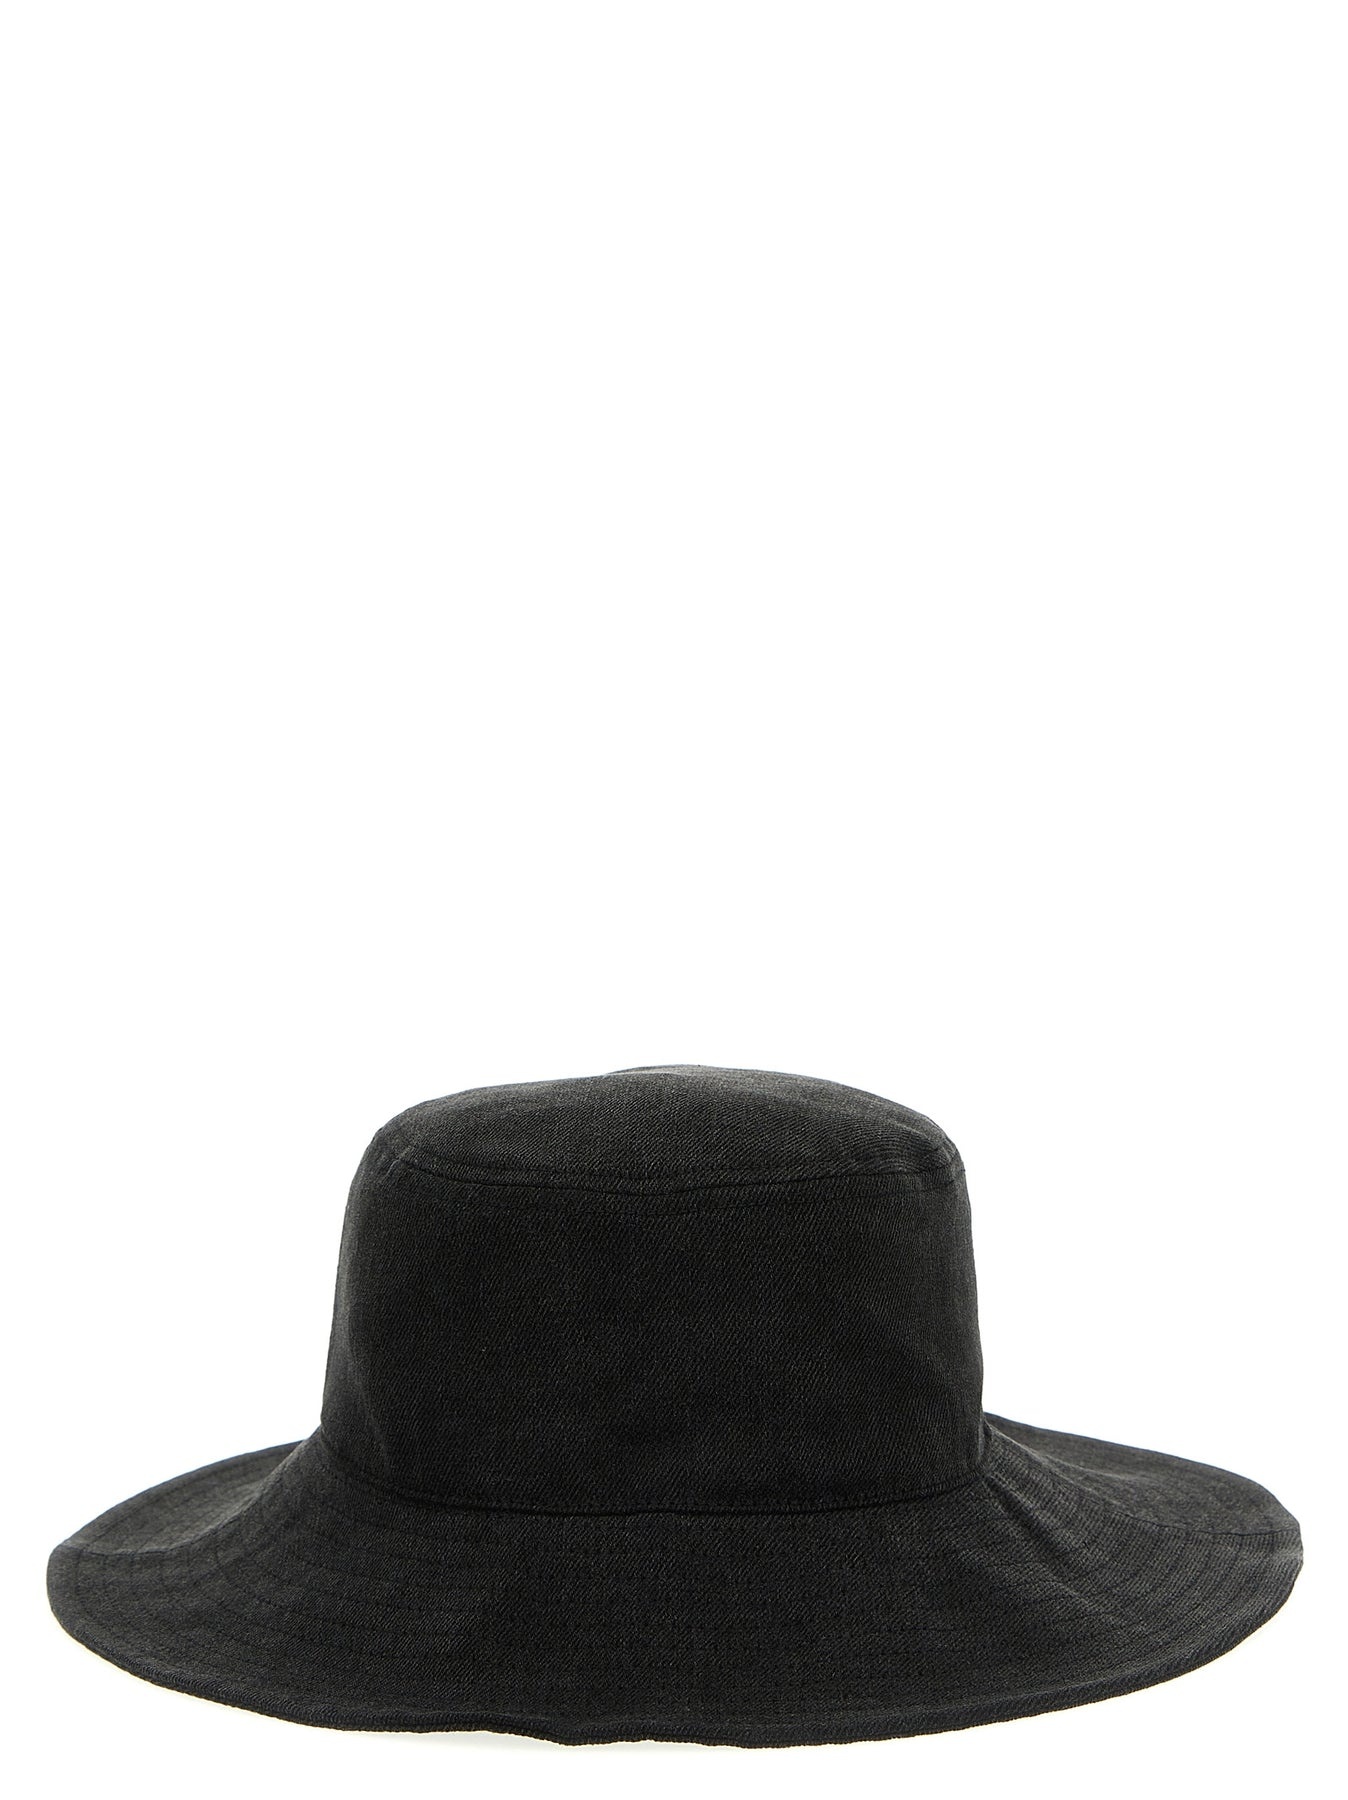 Deliya Hats Black - 3